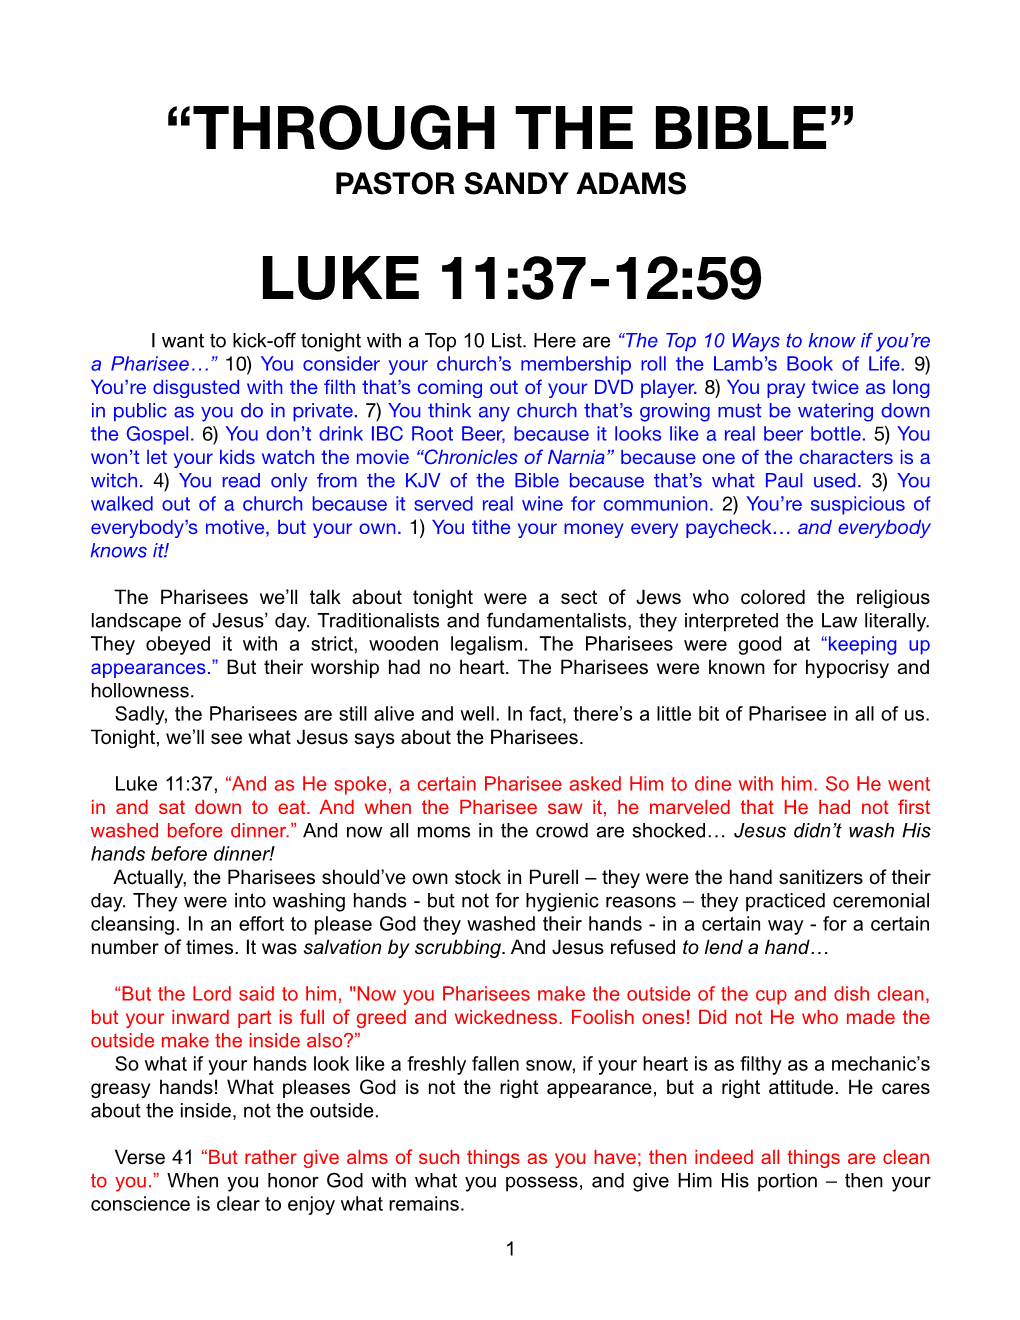 “Through the Bible” Luke 11:37-12:59